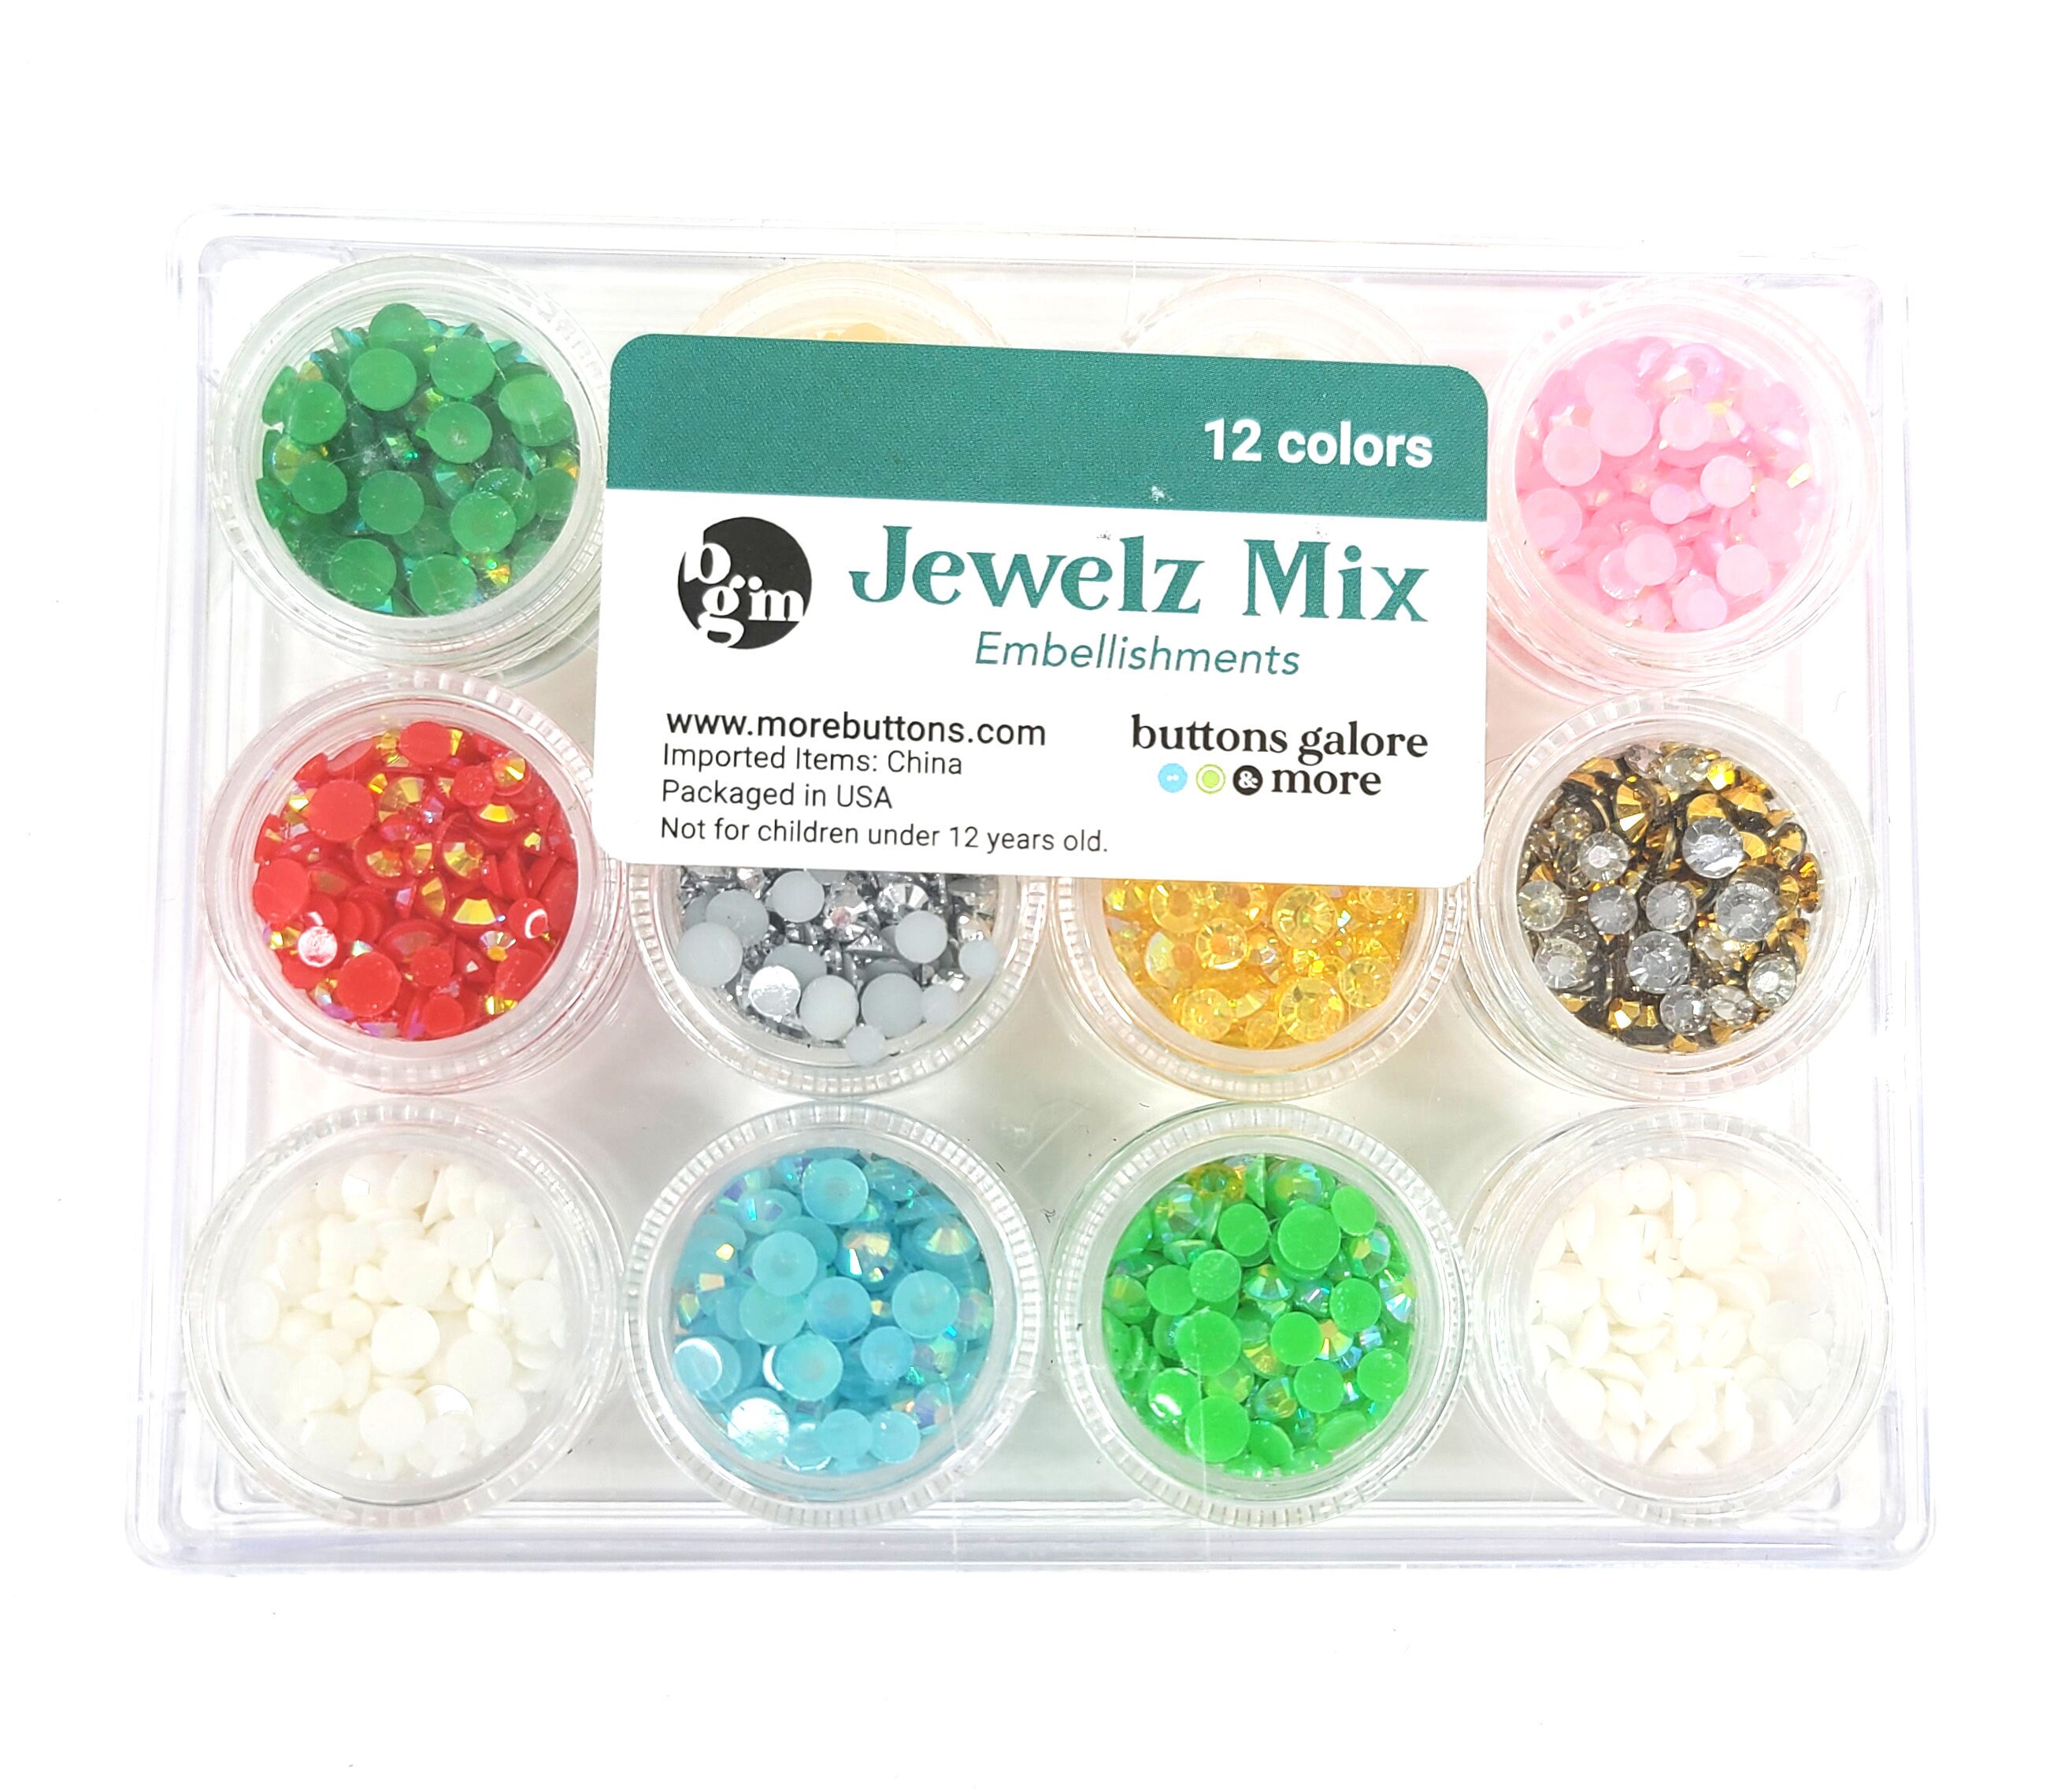 Bright Jewelz Mix